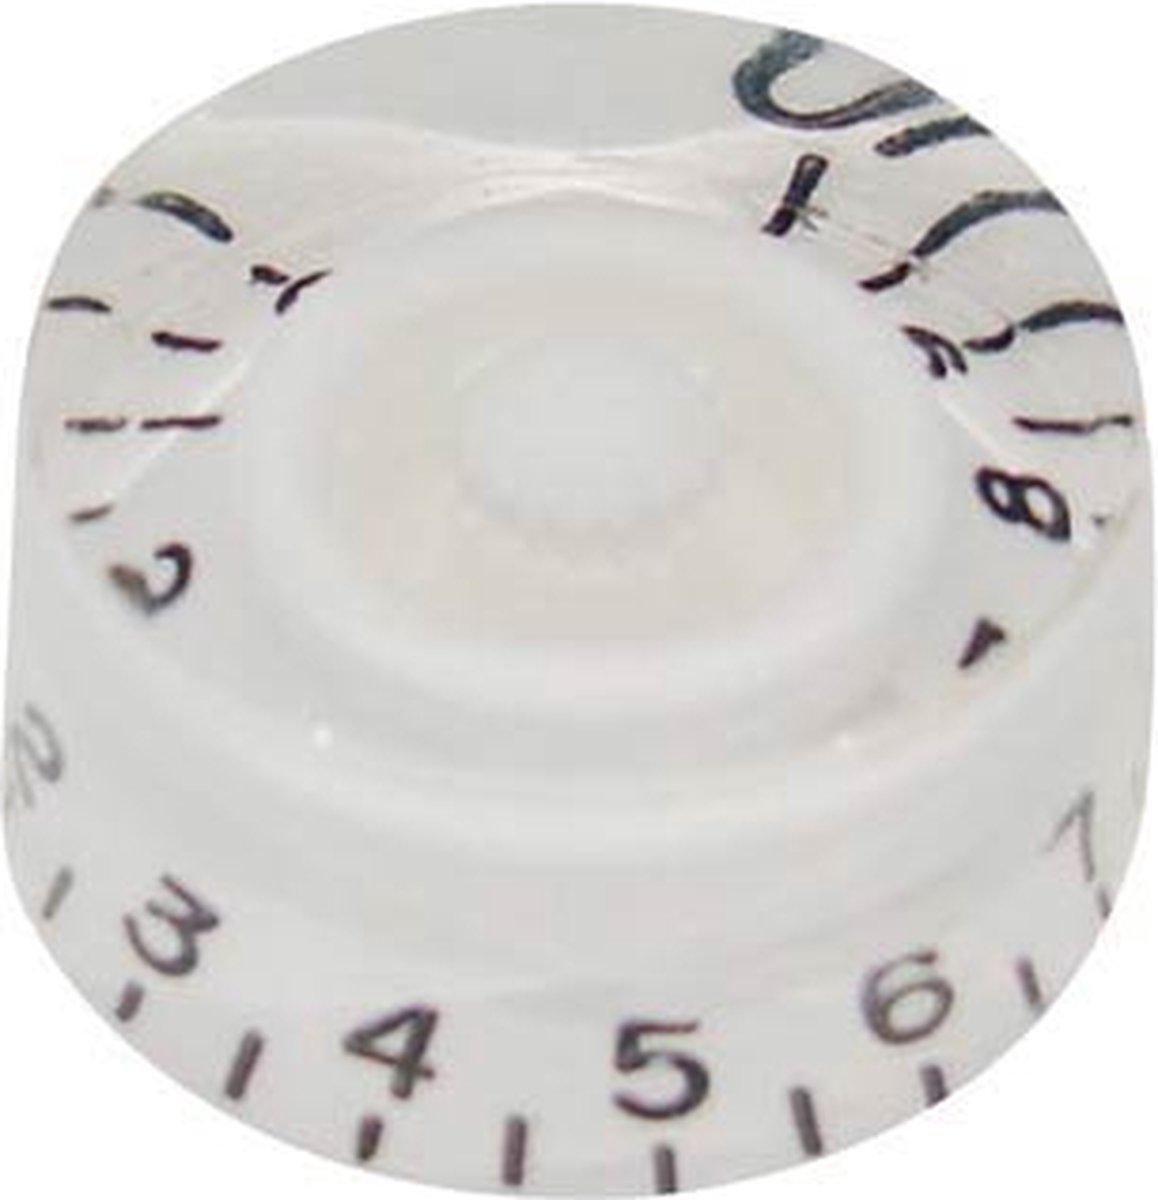 speed knob (hatbox), for inch type pot shaft, transparent white